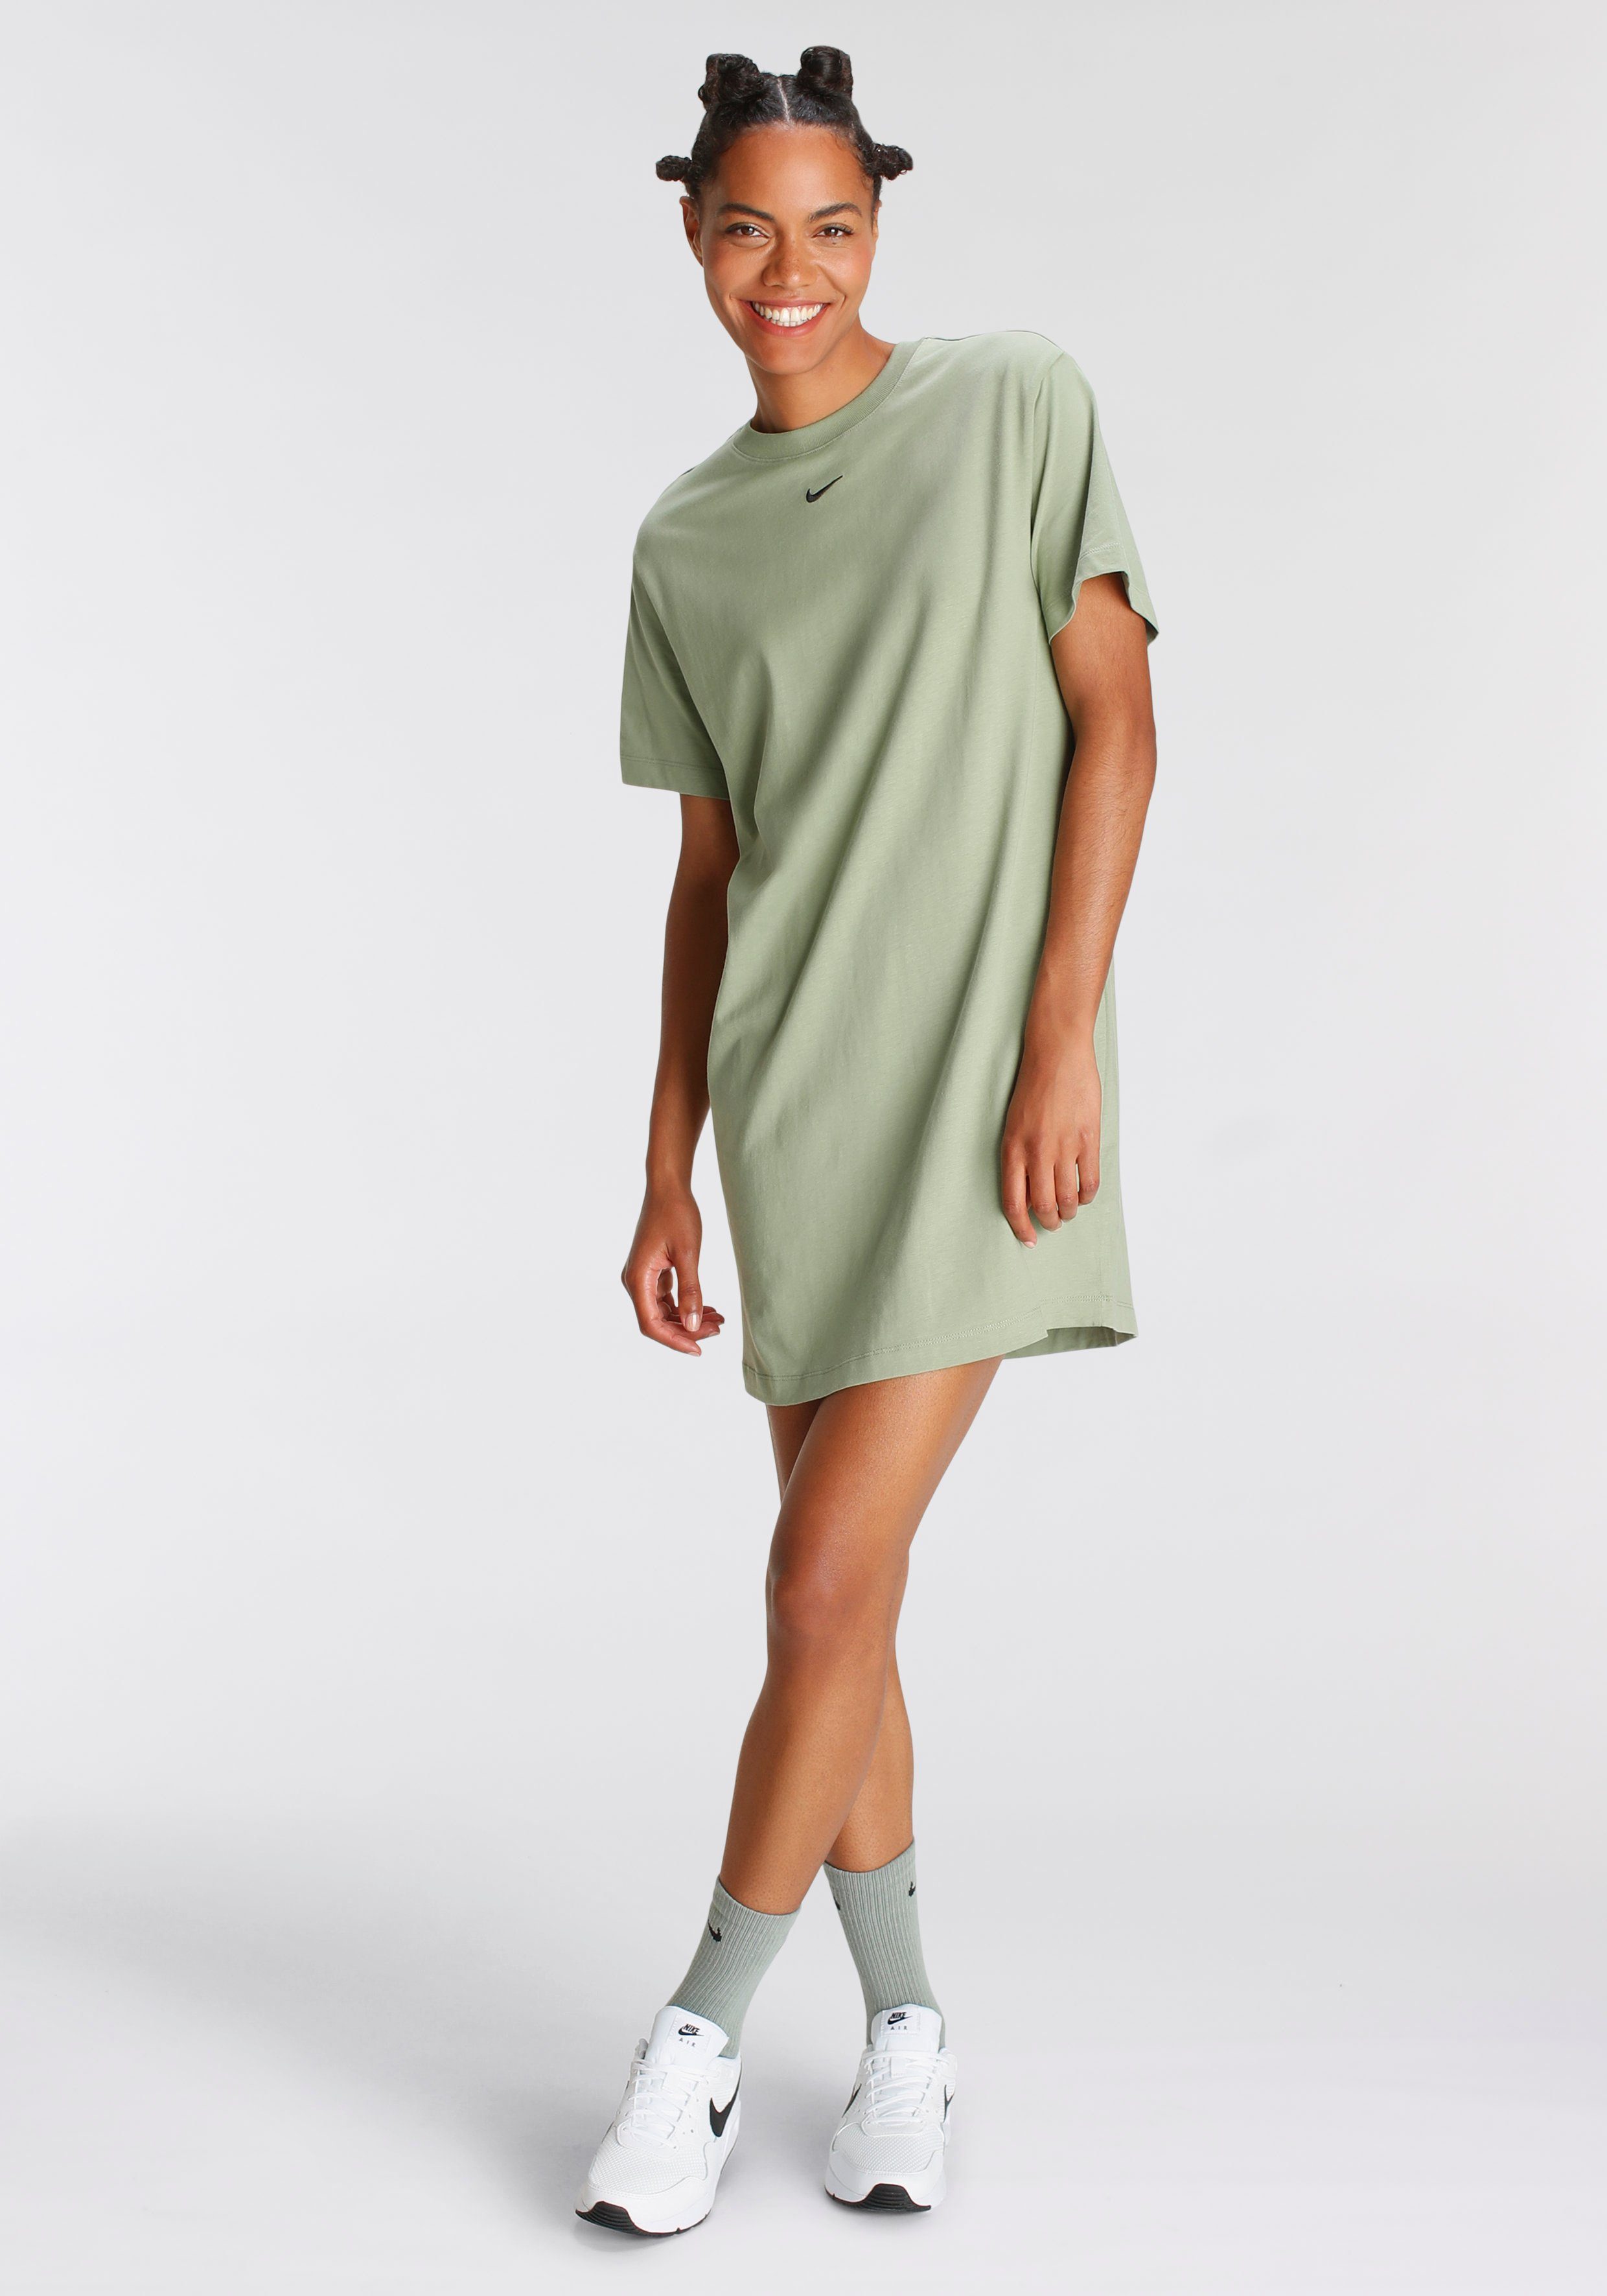 SHORT-SLEEVE OIL Sommerkleid ESSENTIAL GREEN/BLACK WOMEN'S Sportswear Nike DRESS